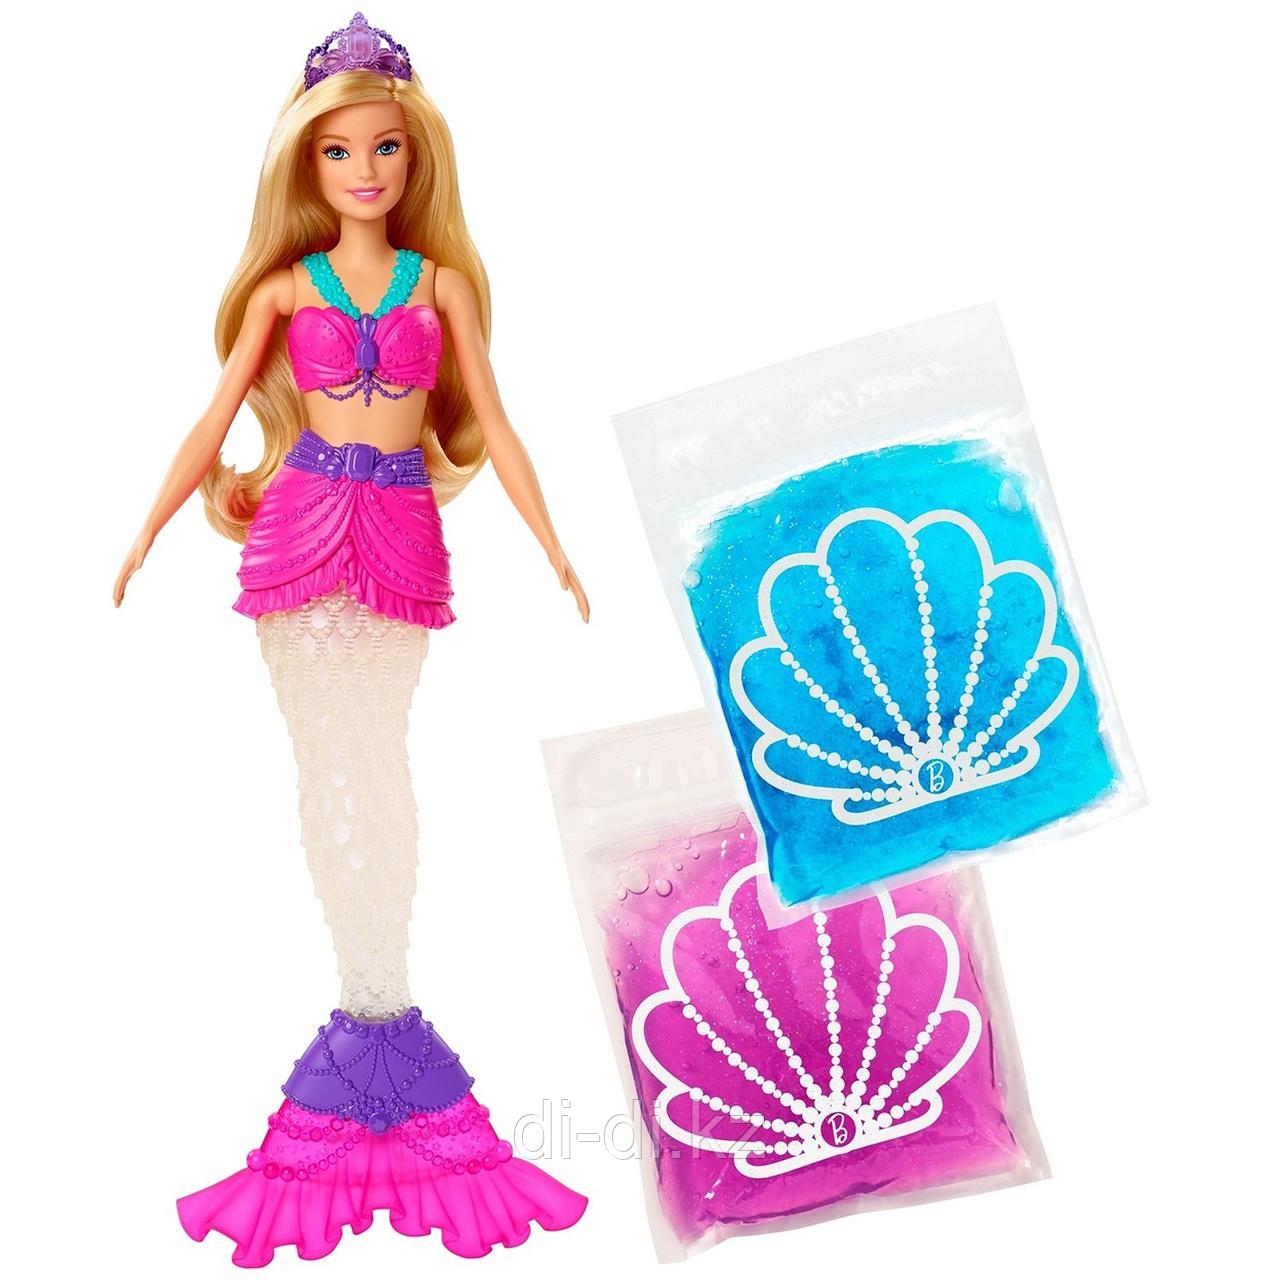 Mattel Barbie Кукла-русалочка "Dreamtopia Невероятные цвета" GKT75